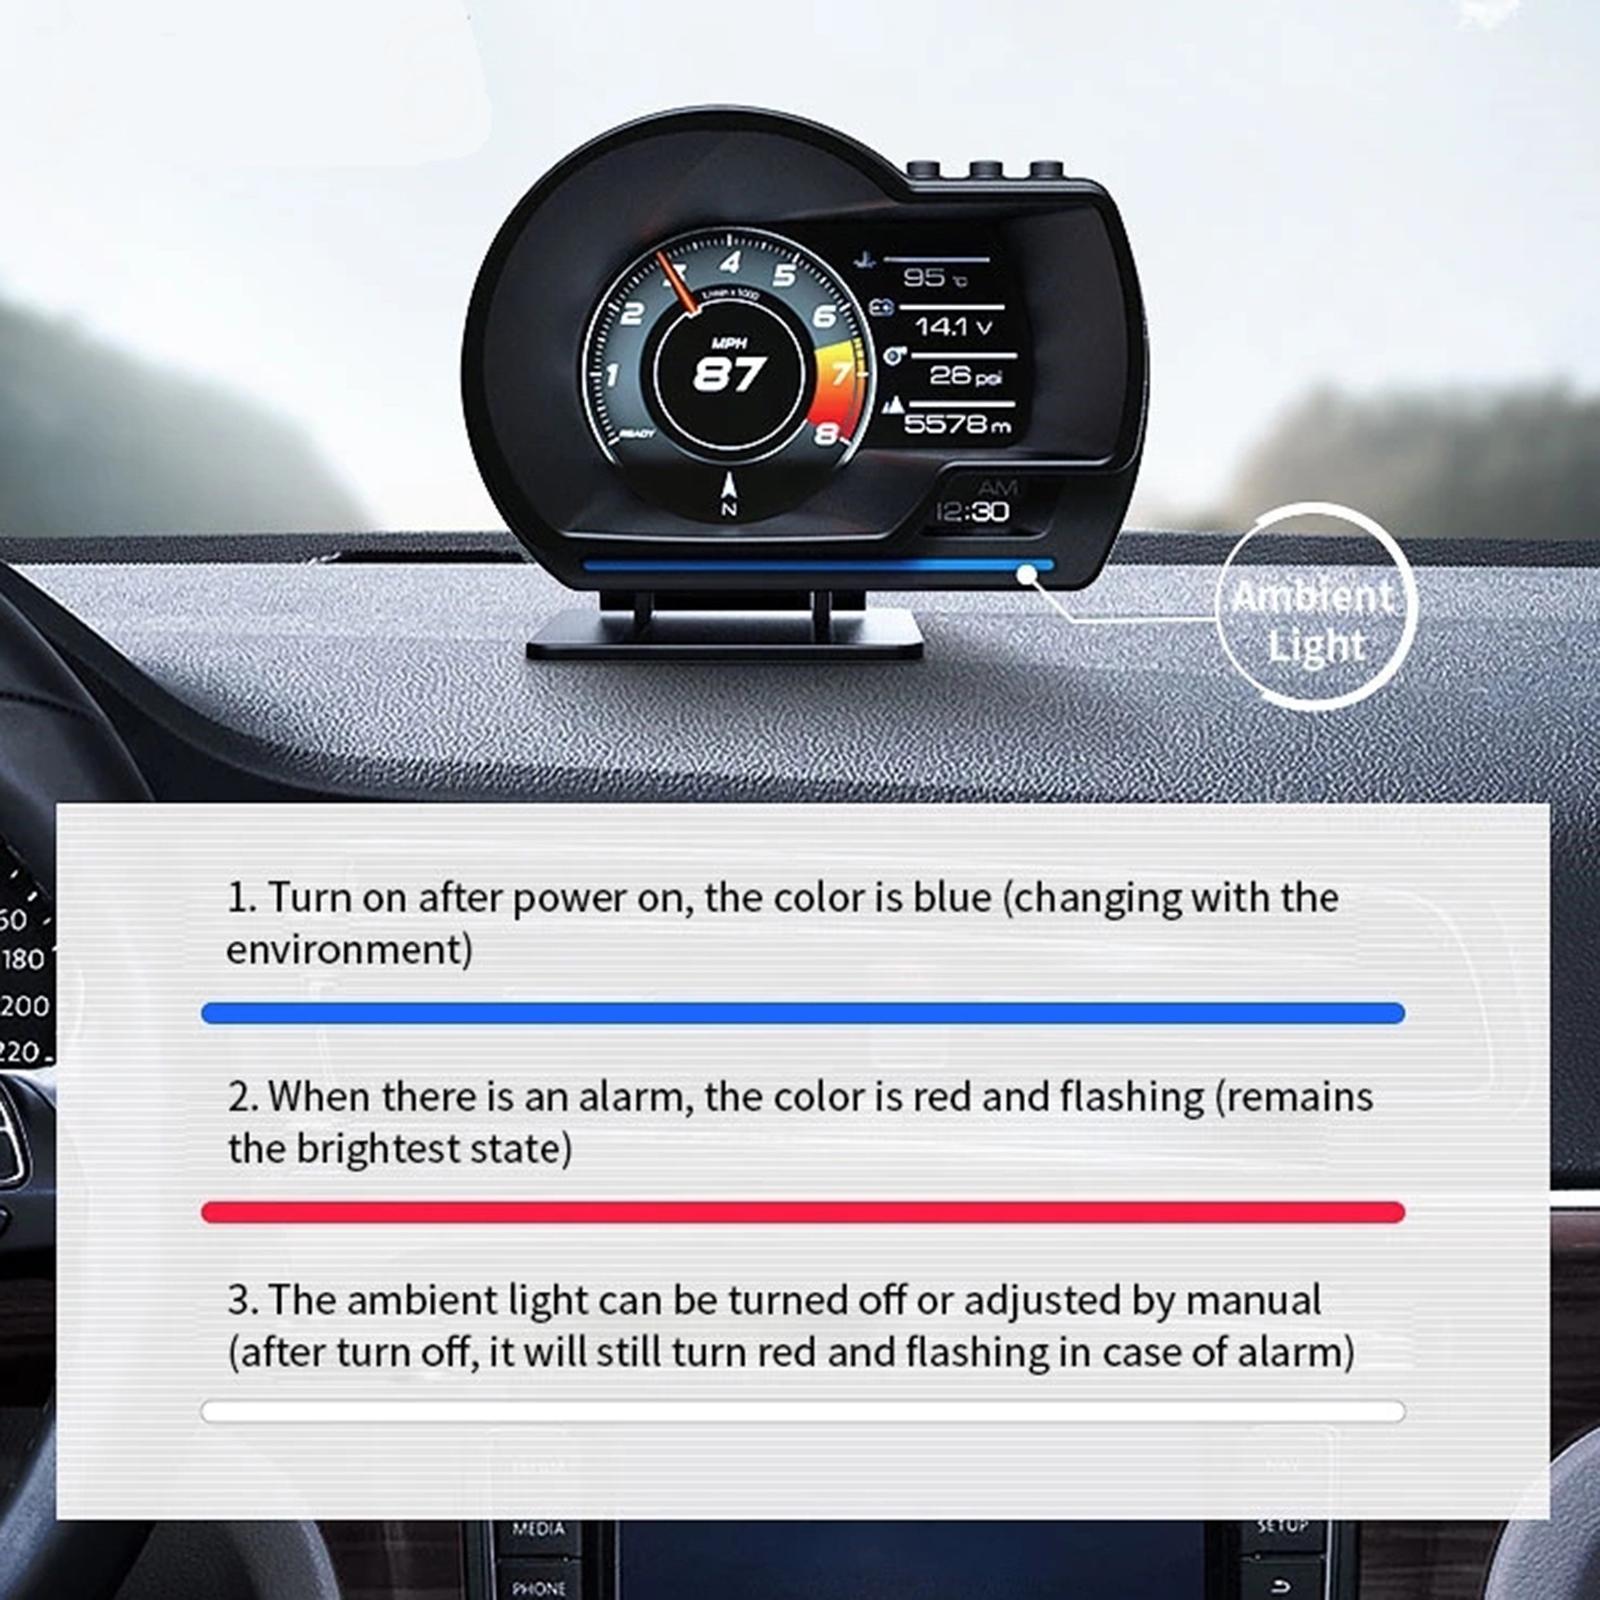 P6 Universal Vehicle HUD Display Digital Car Dashboard System Displays Speed